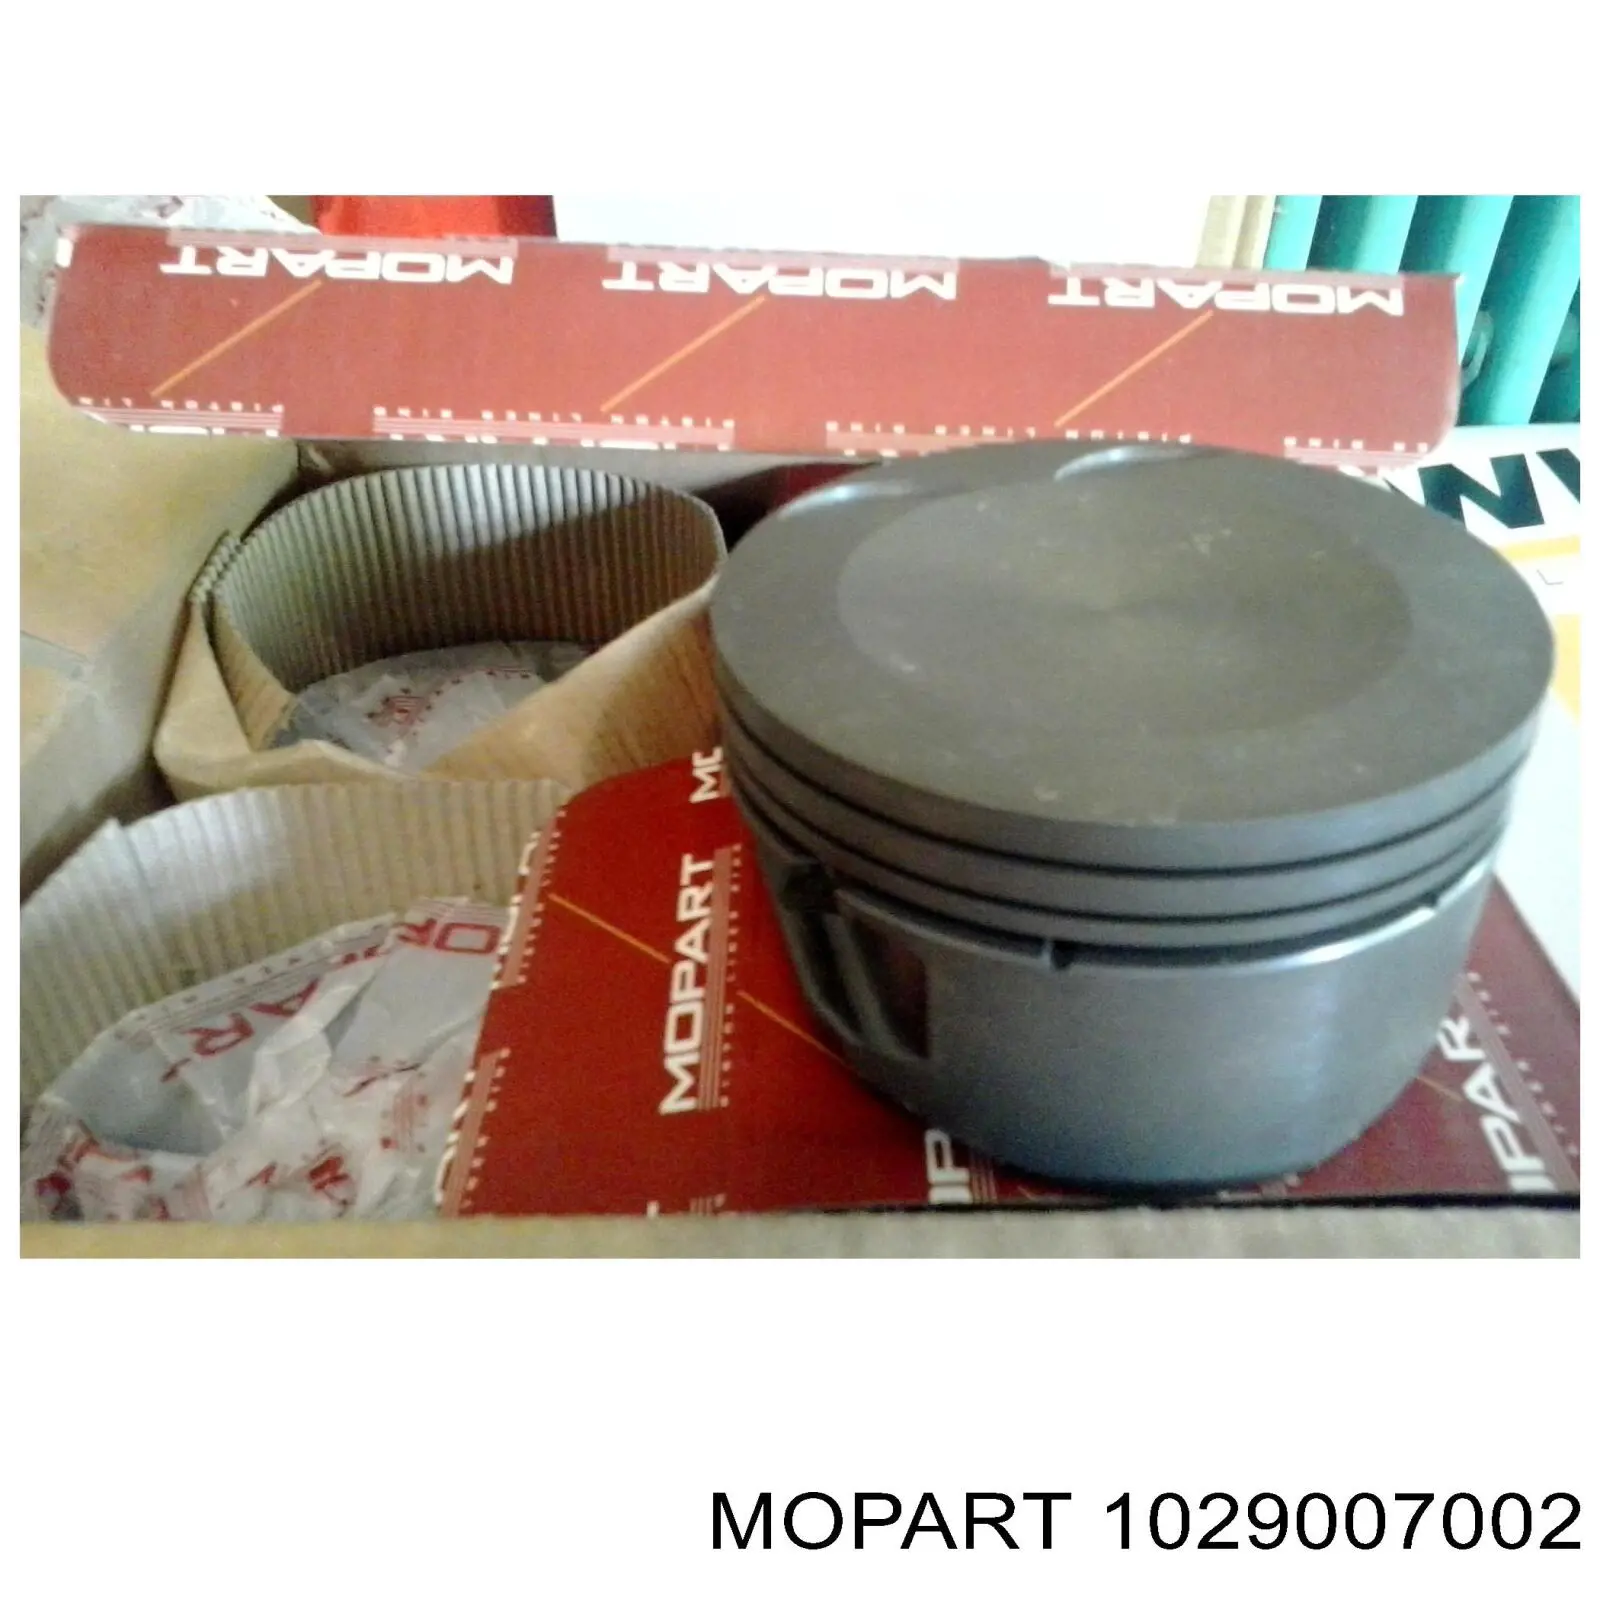 1029007002 Mopart pistón completo para 1 cilindro, cota de reparación + 1,00 mm